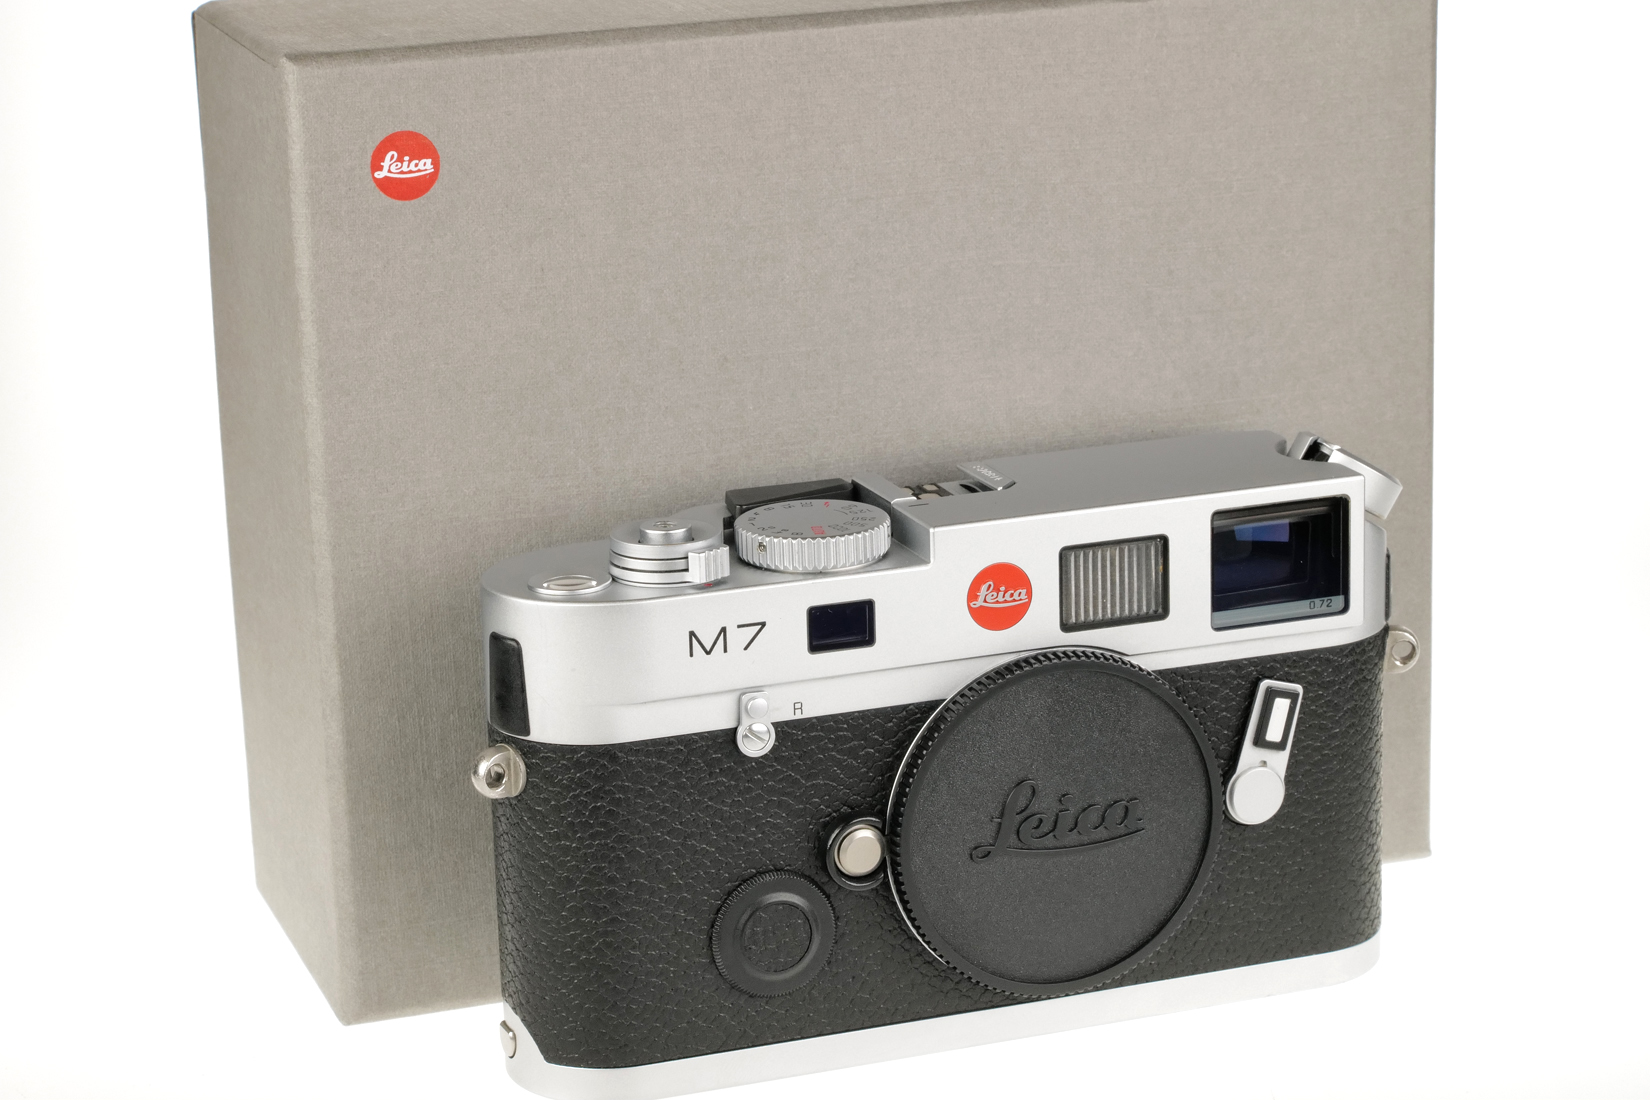 Leica M7 0.72, silbern verchromt, 20003